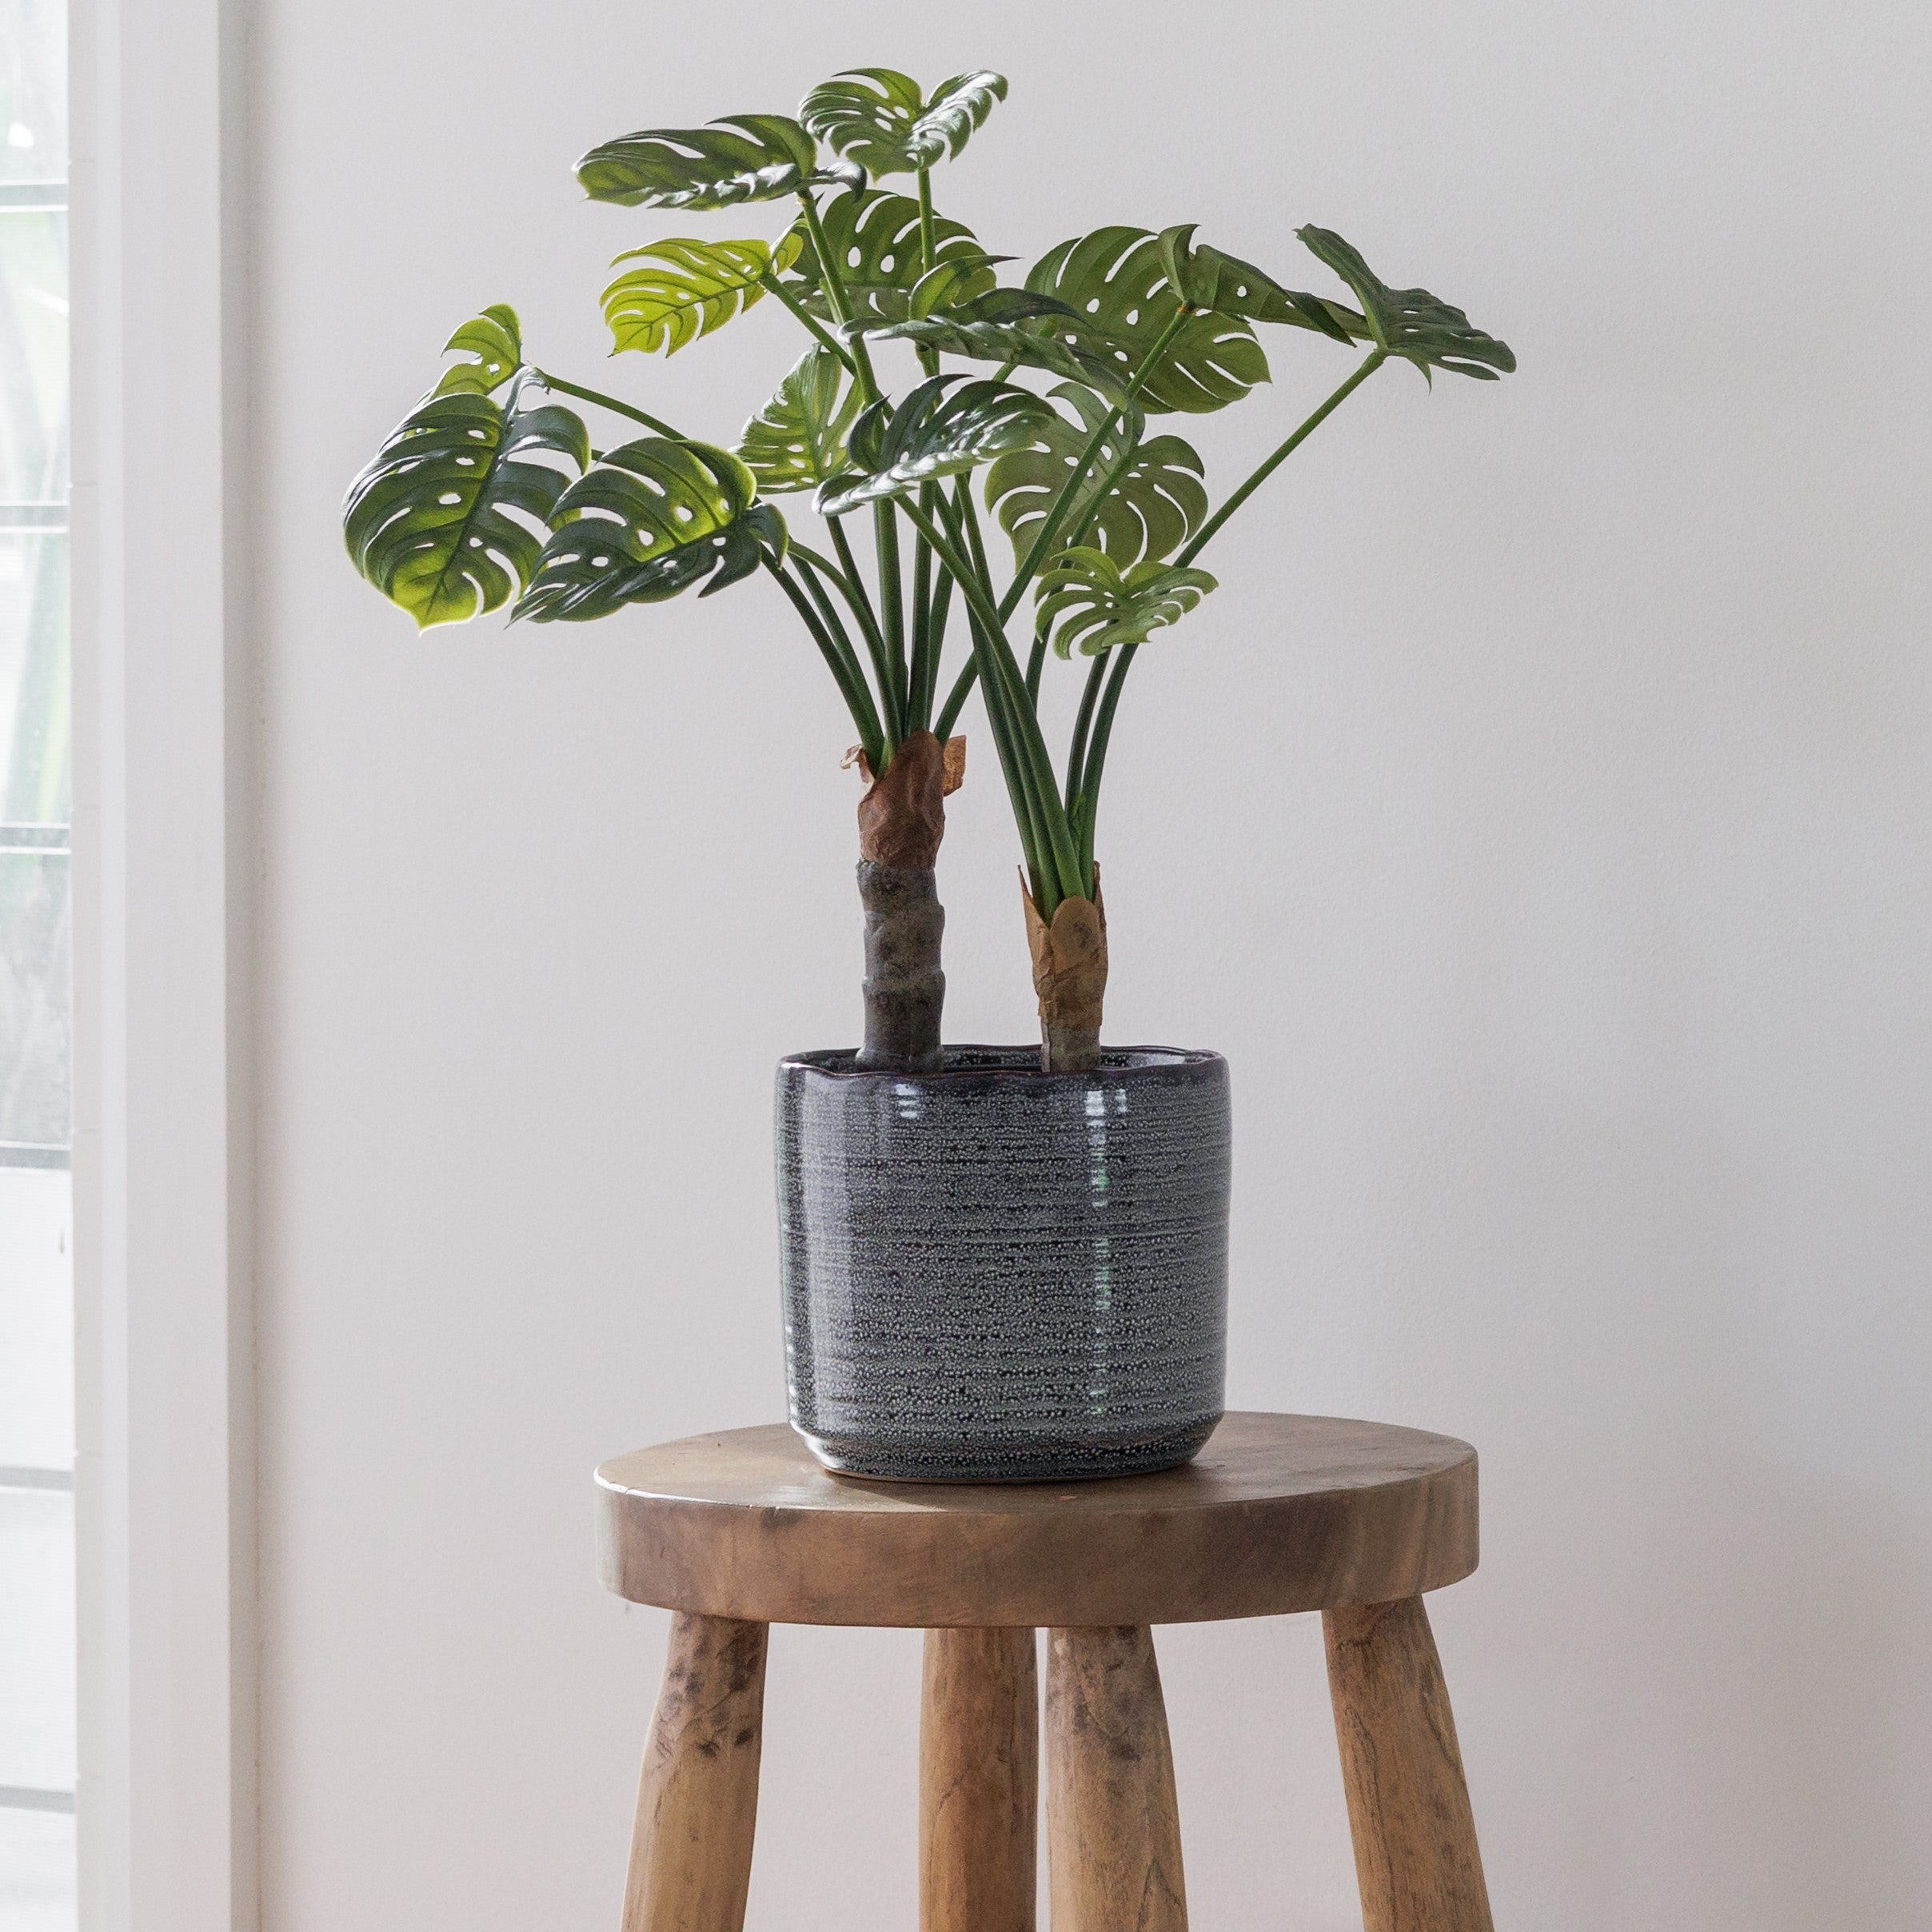 Artificial pot plant